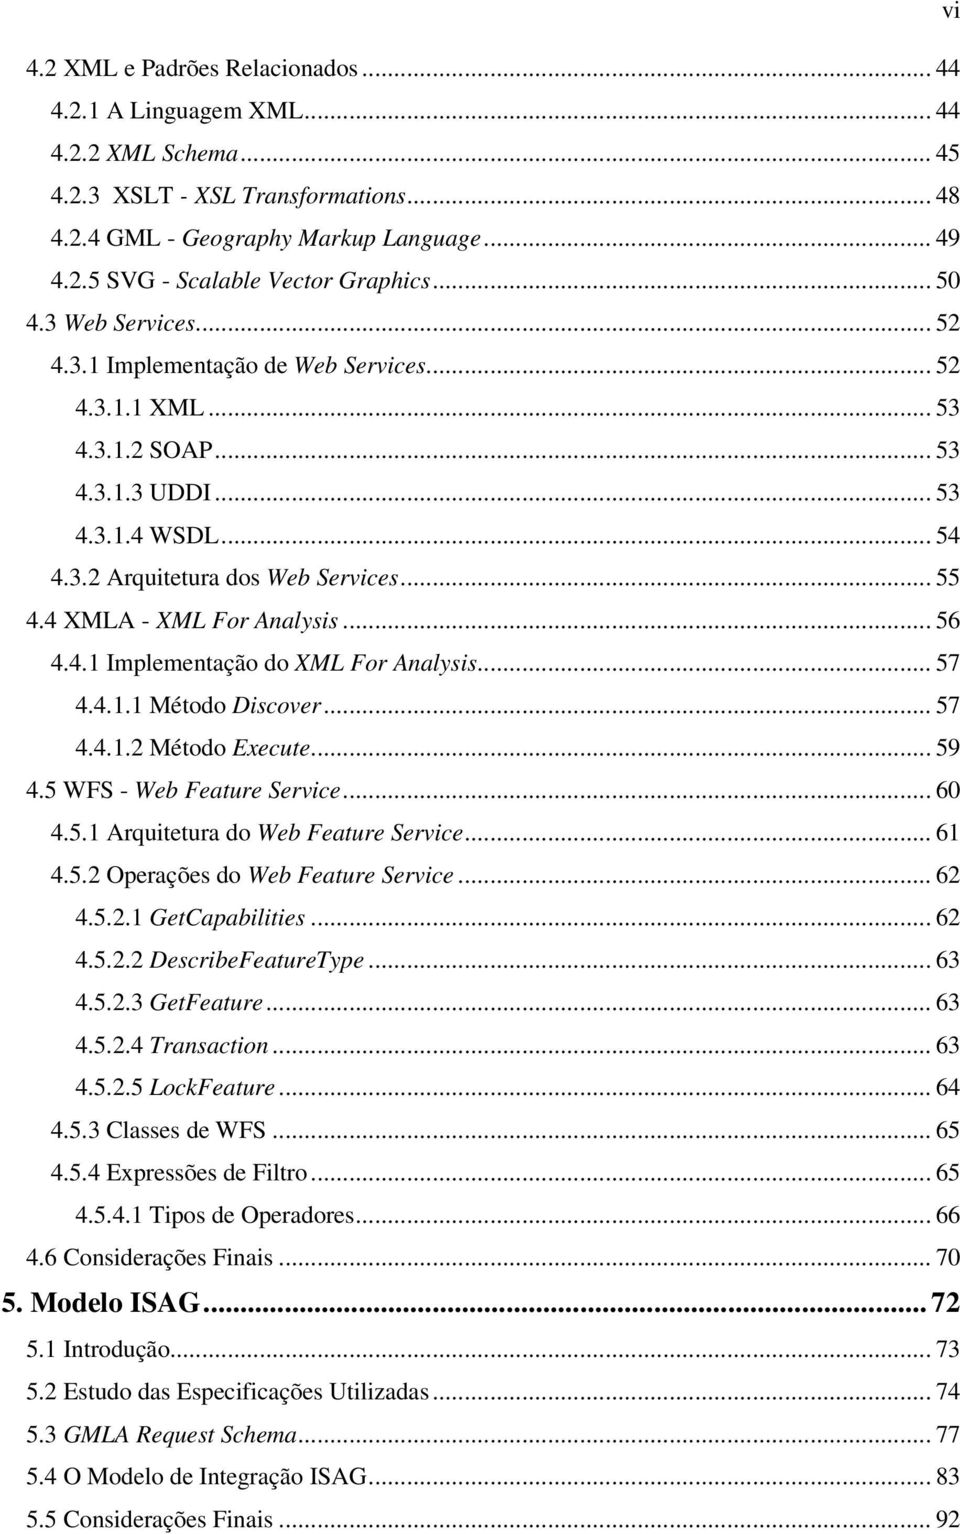 4 XMLA - XML For Analysis... 56 4.4.1 Implementação do XML For Analysis... 57 4.4.1.1 Método Discover... 57 4.4.1.2 Método Execute... 59 4.5 WFS - Web Feature Service... 60 4.5.1 Arquitetura do Web Feature Service.